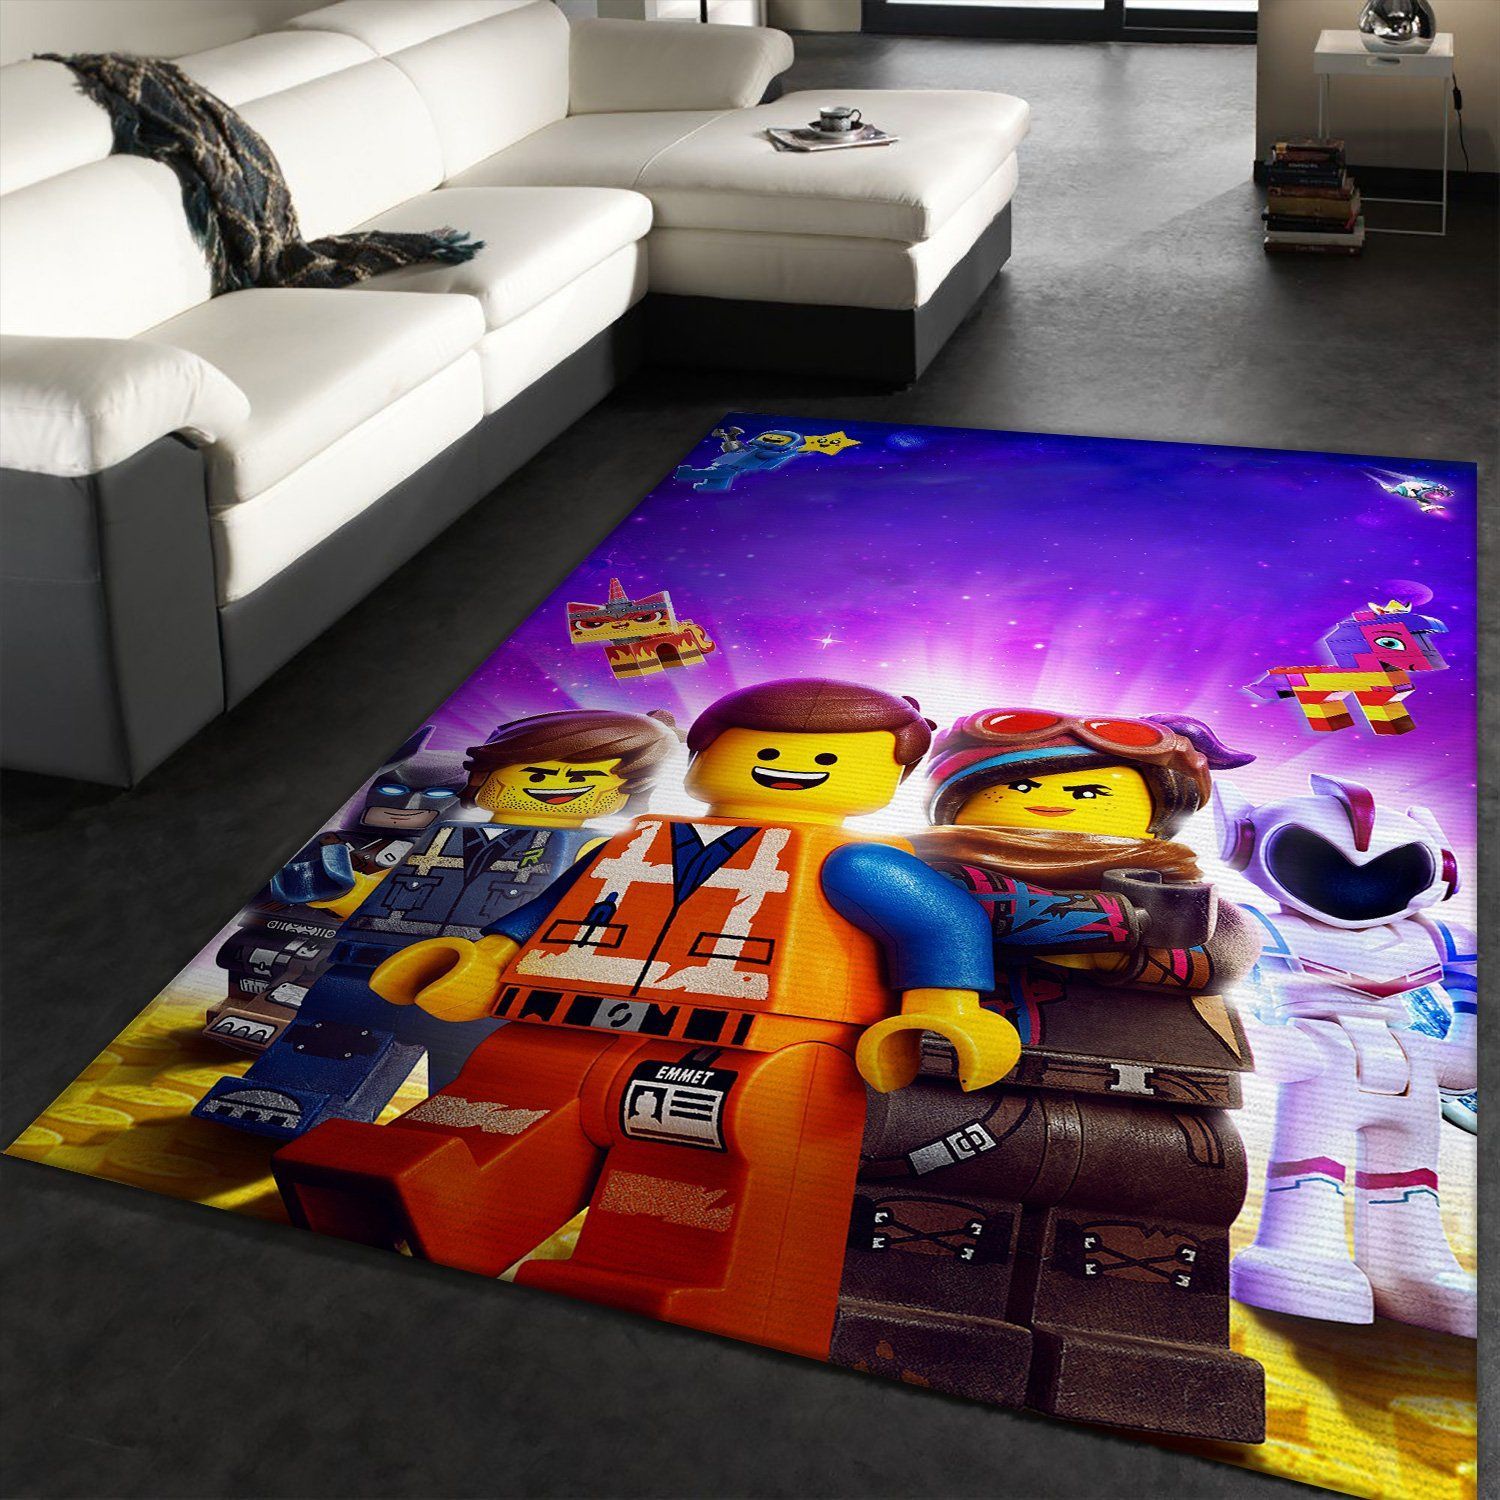 Lego Carpet - Custom Size And Printing